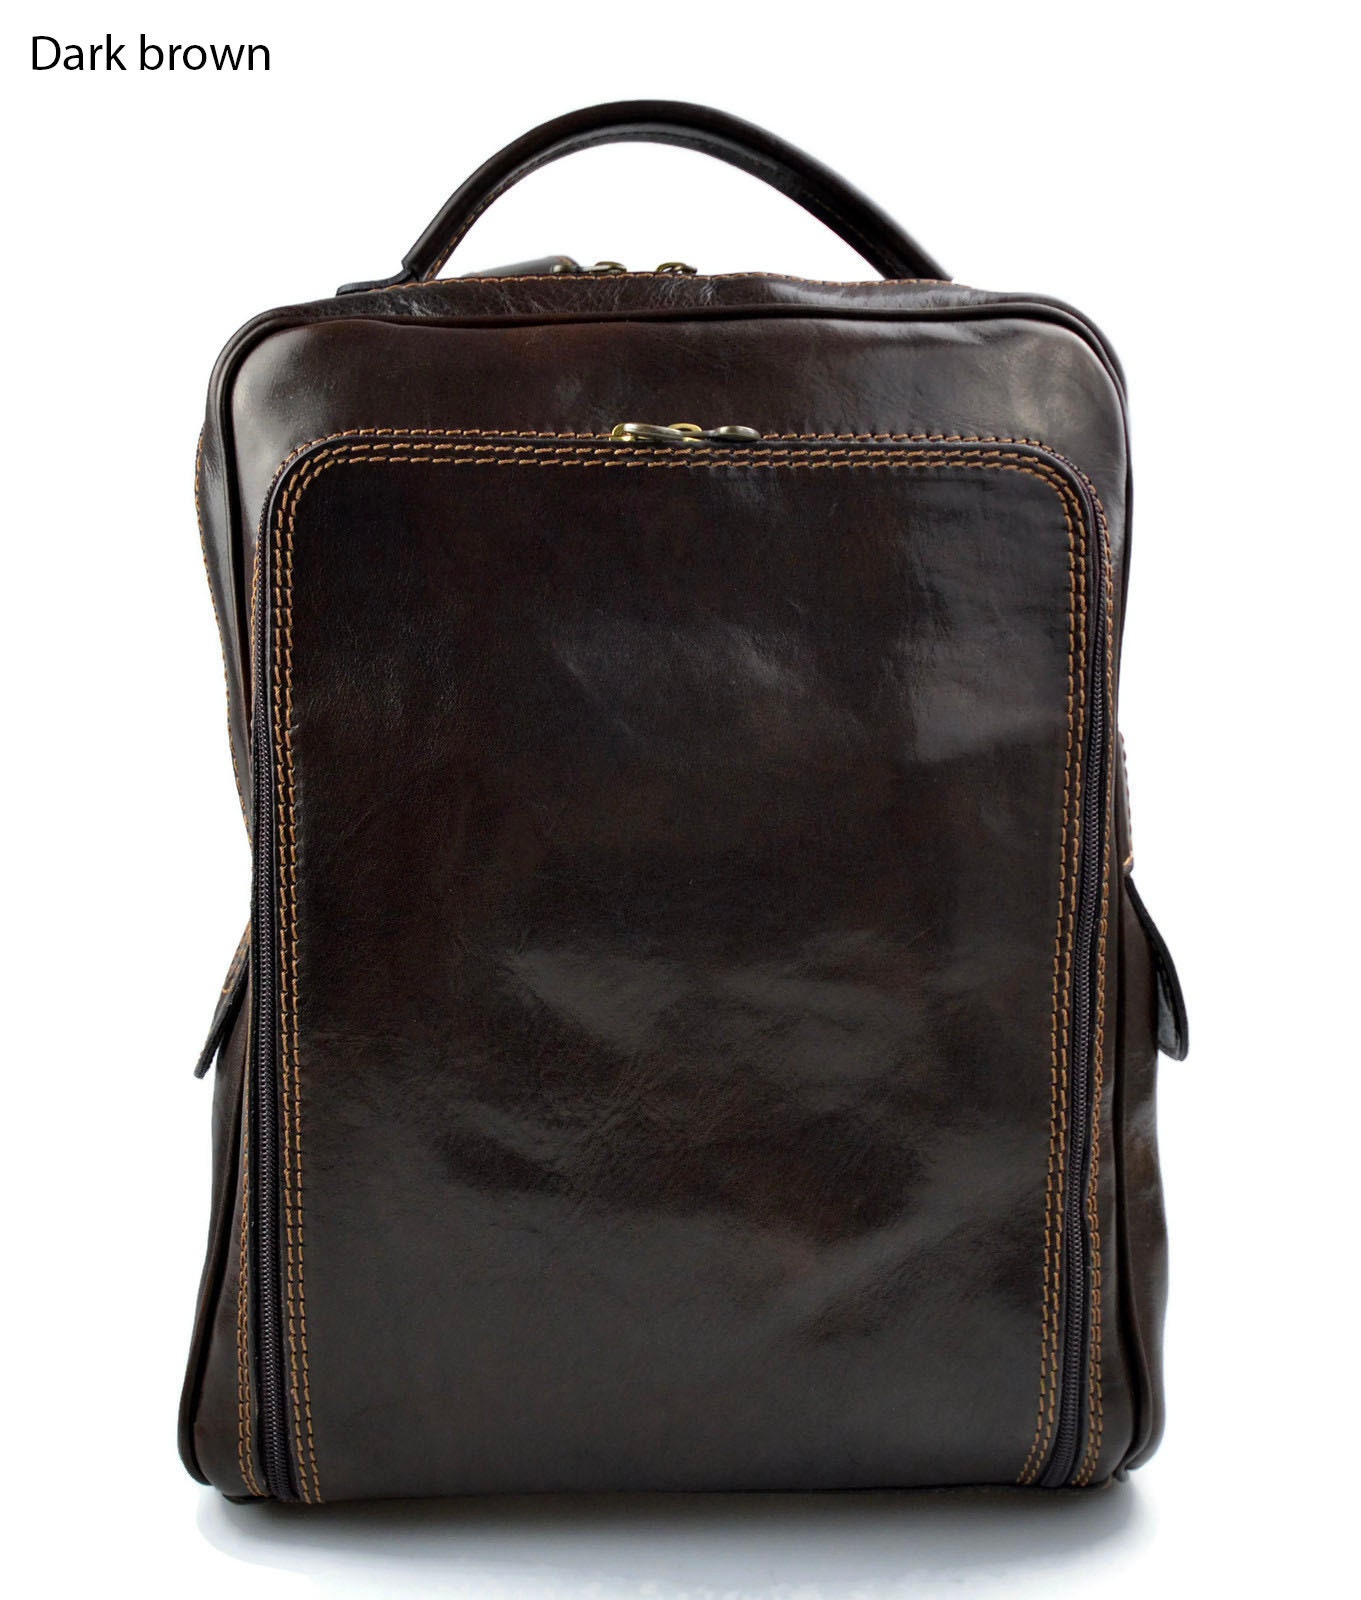 Backpack genuine leather travel bag weekender sports bag gym | Etsy